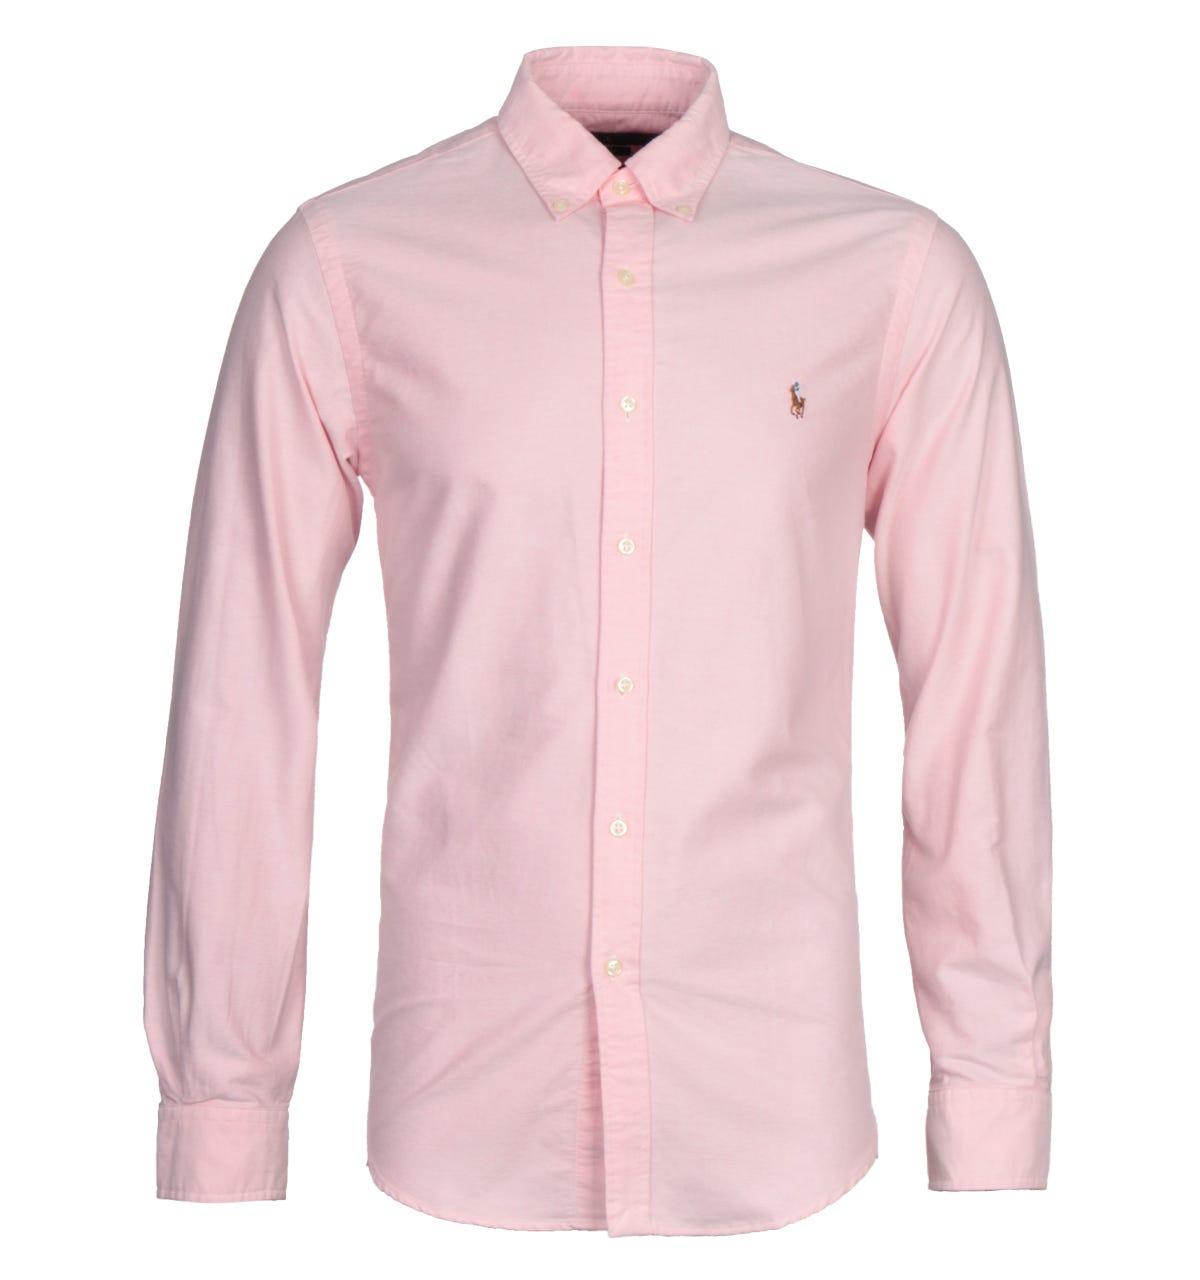 Polo Ralph Lauren Cotton Pink Slim Fit Oxford Shirt for Men - Lyst